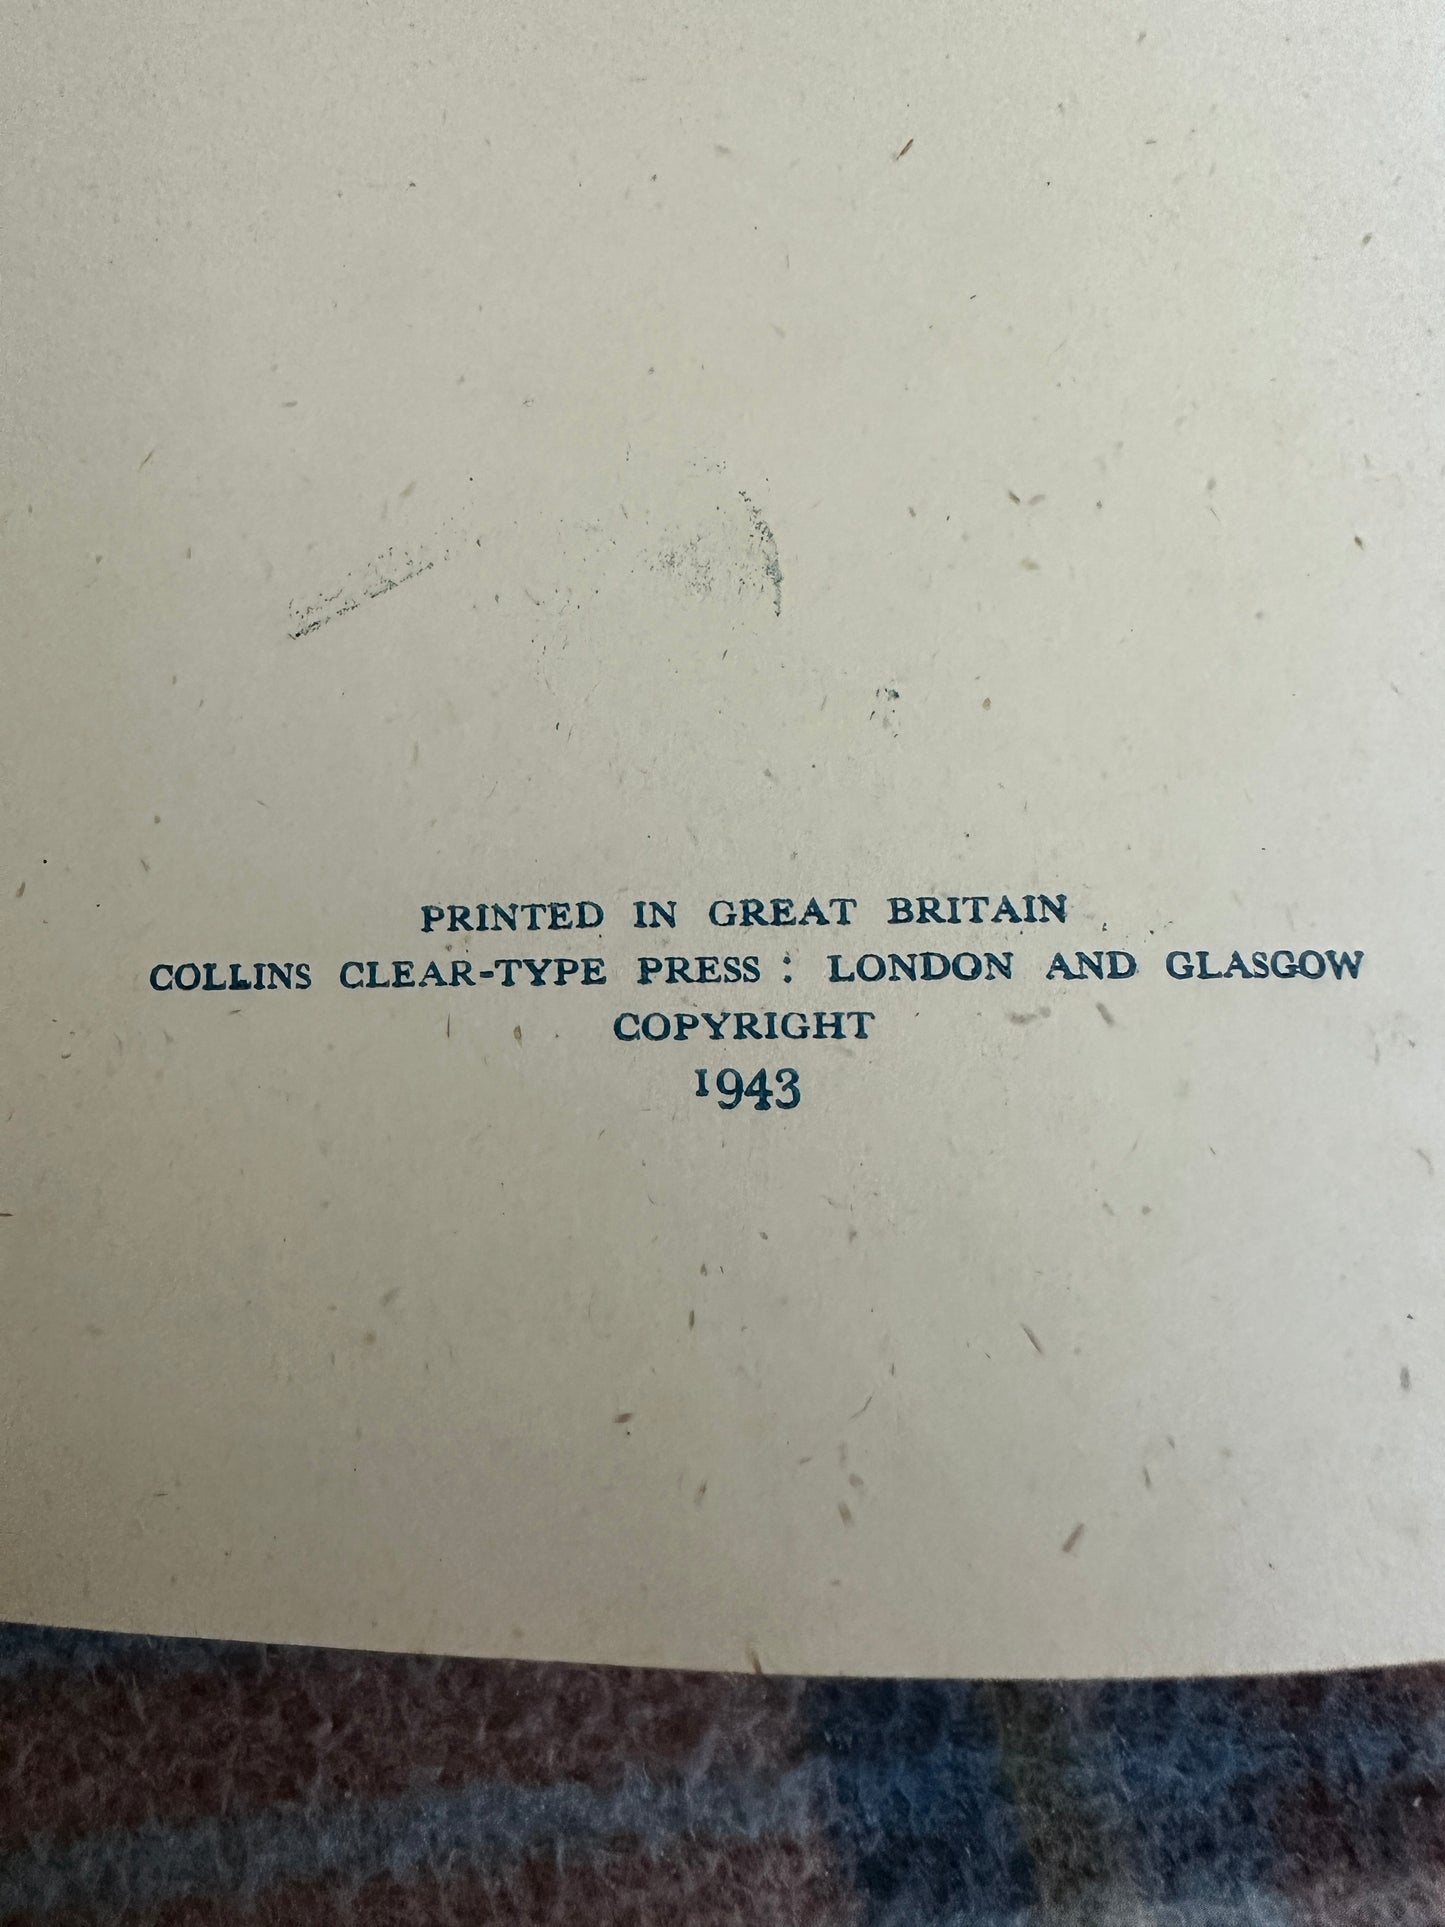 1943*1st* Water-Rat’s Picnic - Alison Uttley(Margaret Tempest)Collins